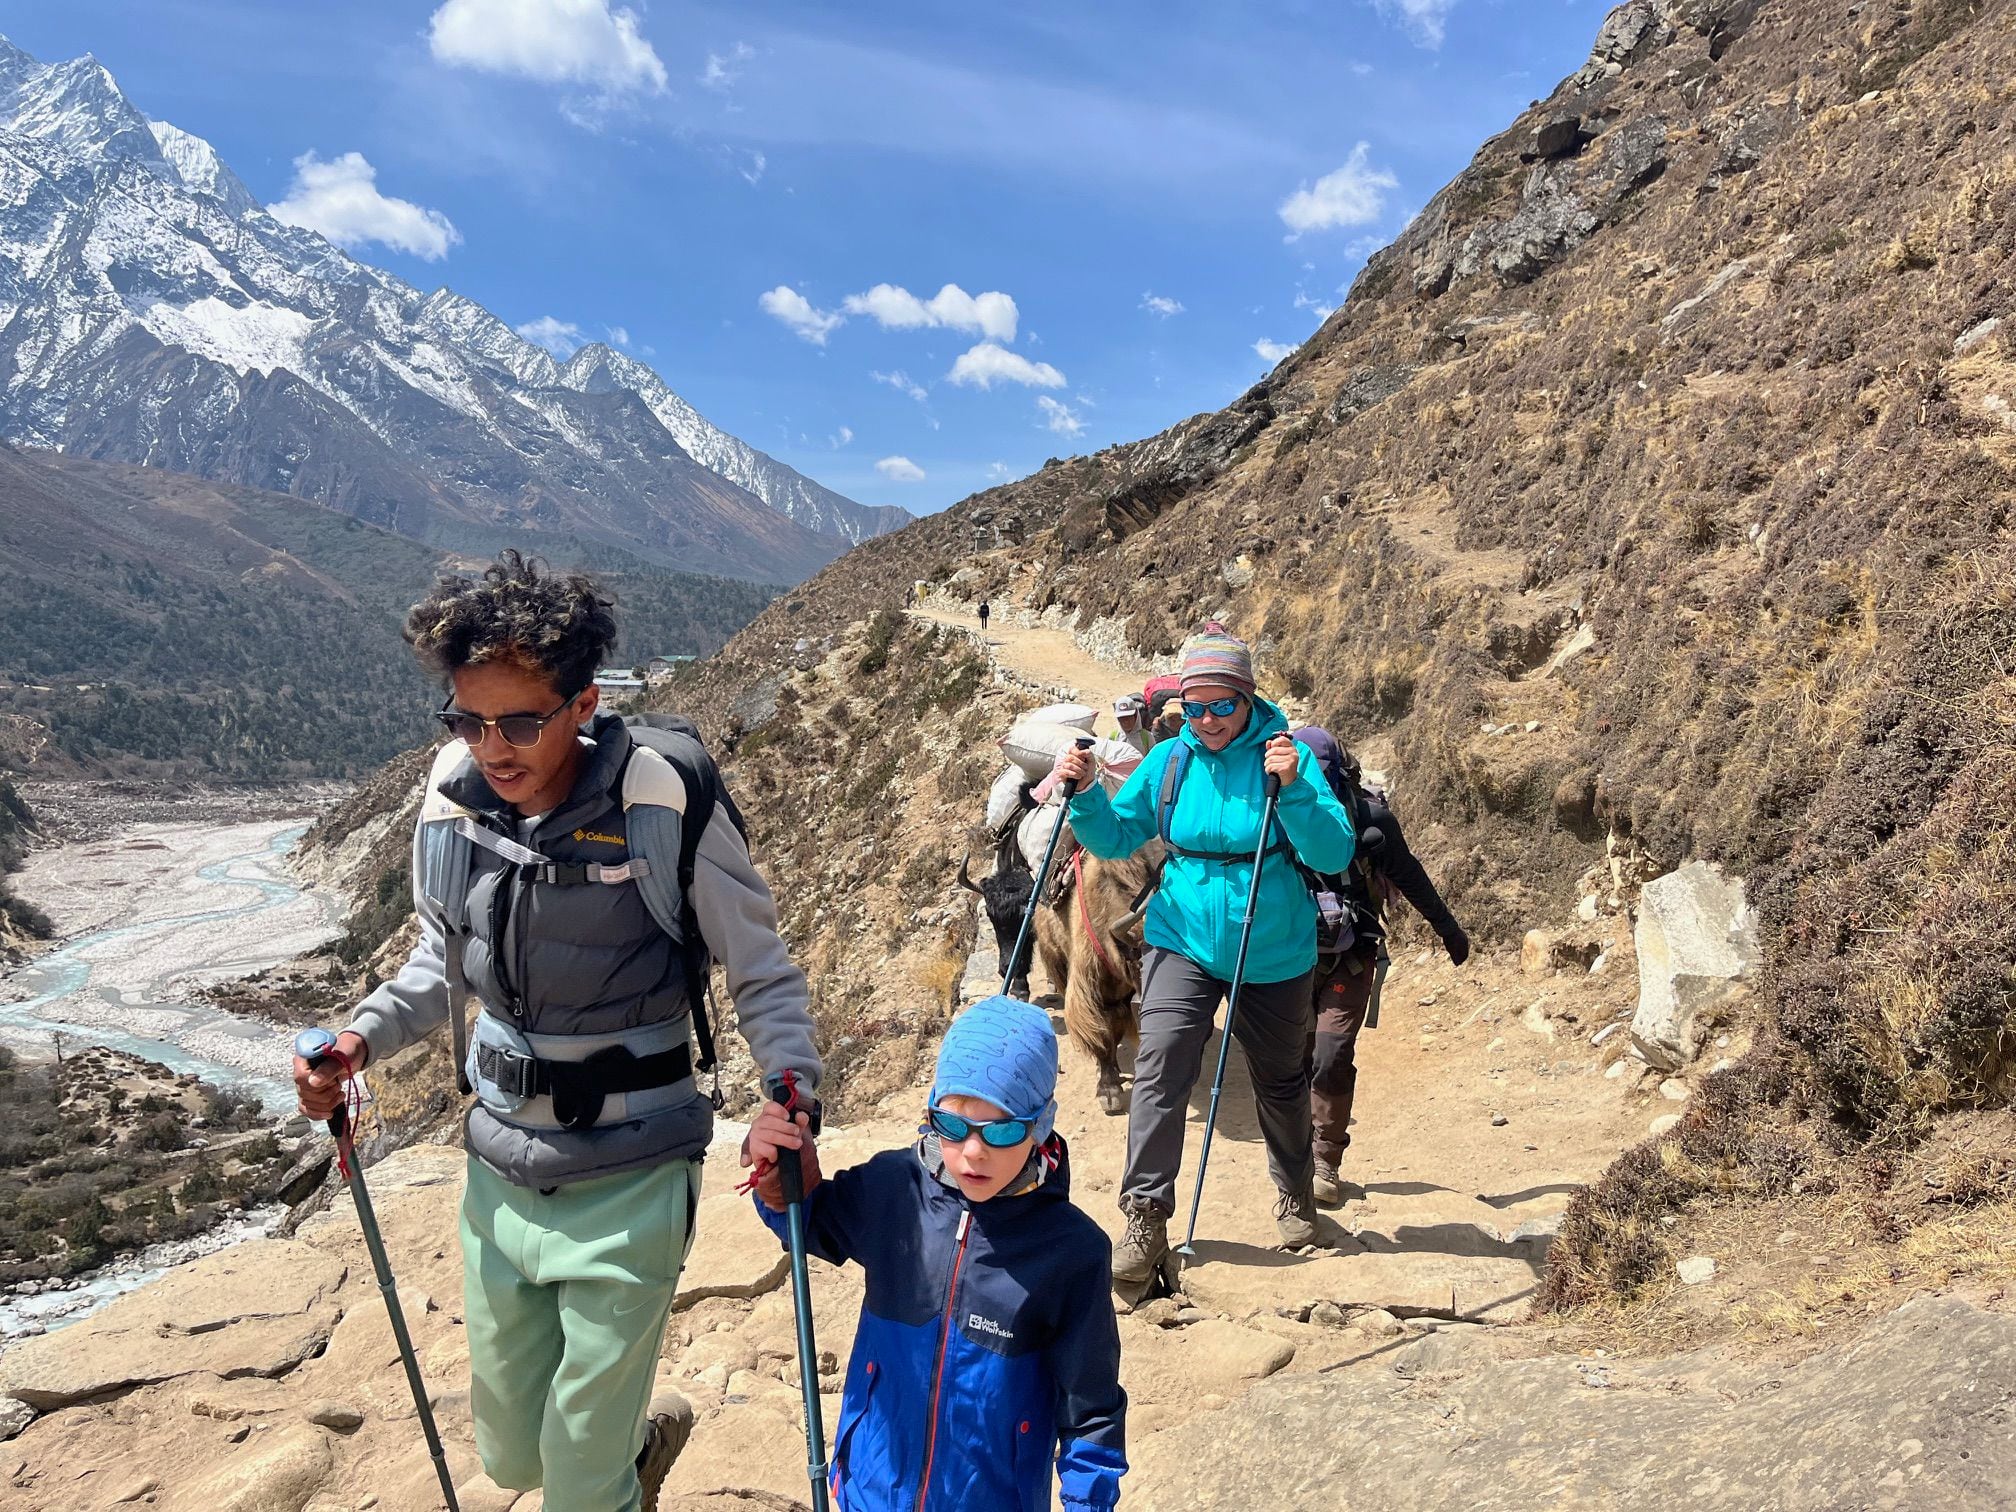 six-year-old dubai pupil sets sights high after everest trek